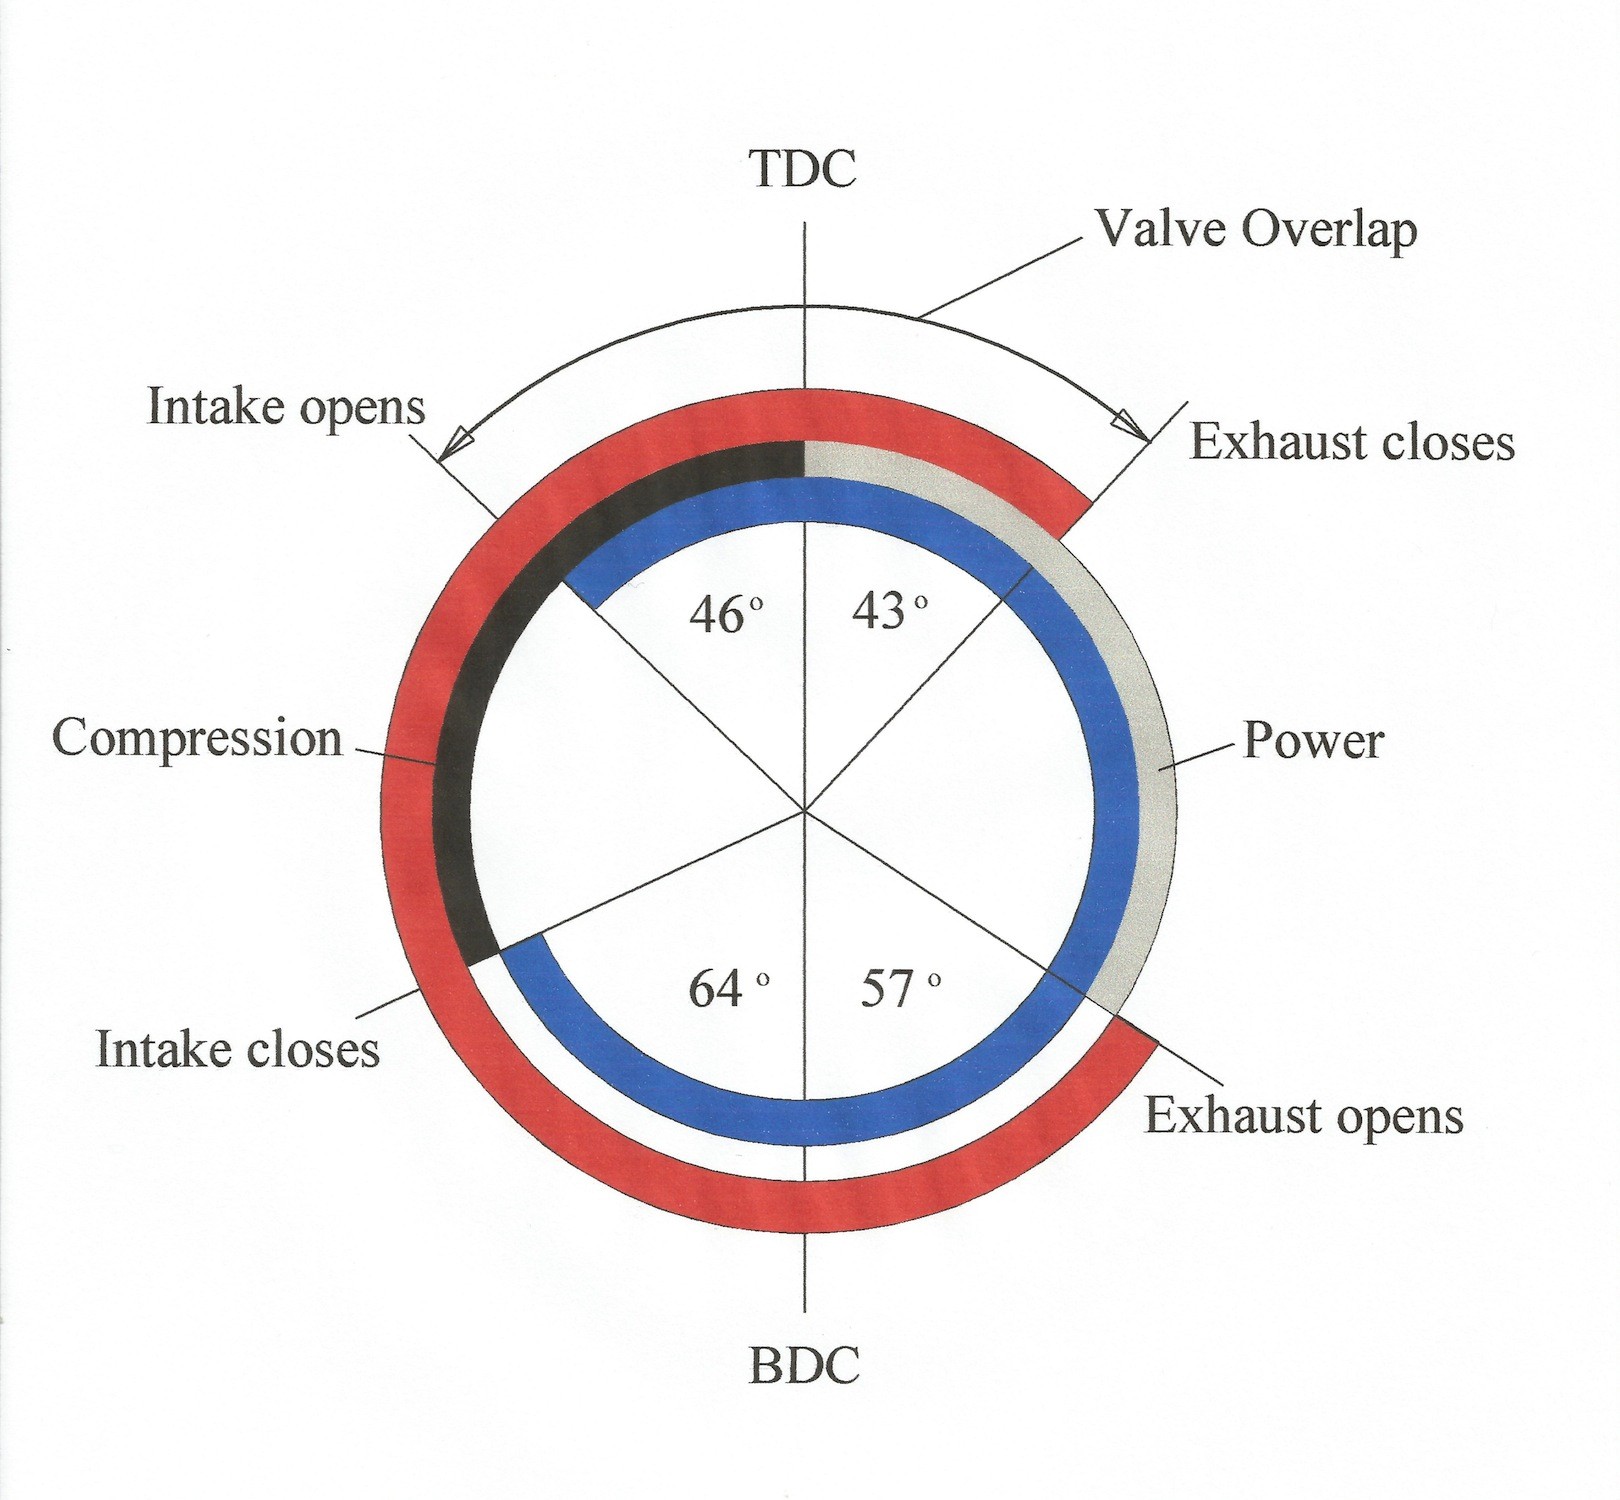 Valve Timing Diagram Of Four Stroke Petrol Engine Engine Valve Timing Diagram Valve Overlap Of Valve Timing Diagram Of Four Stroke Petrol Engine